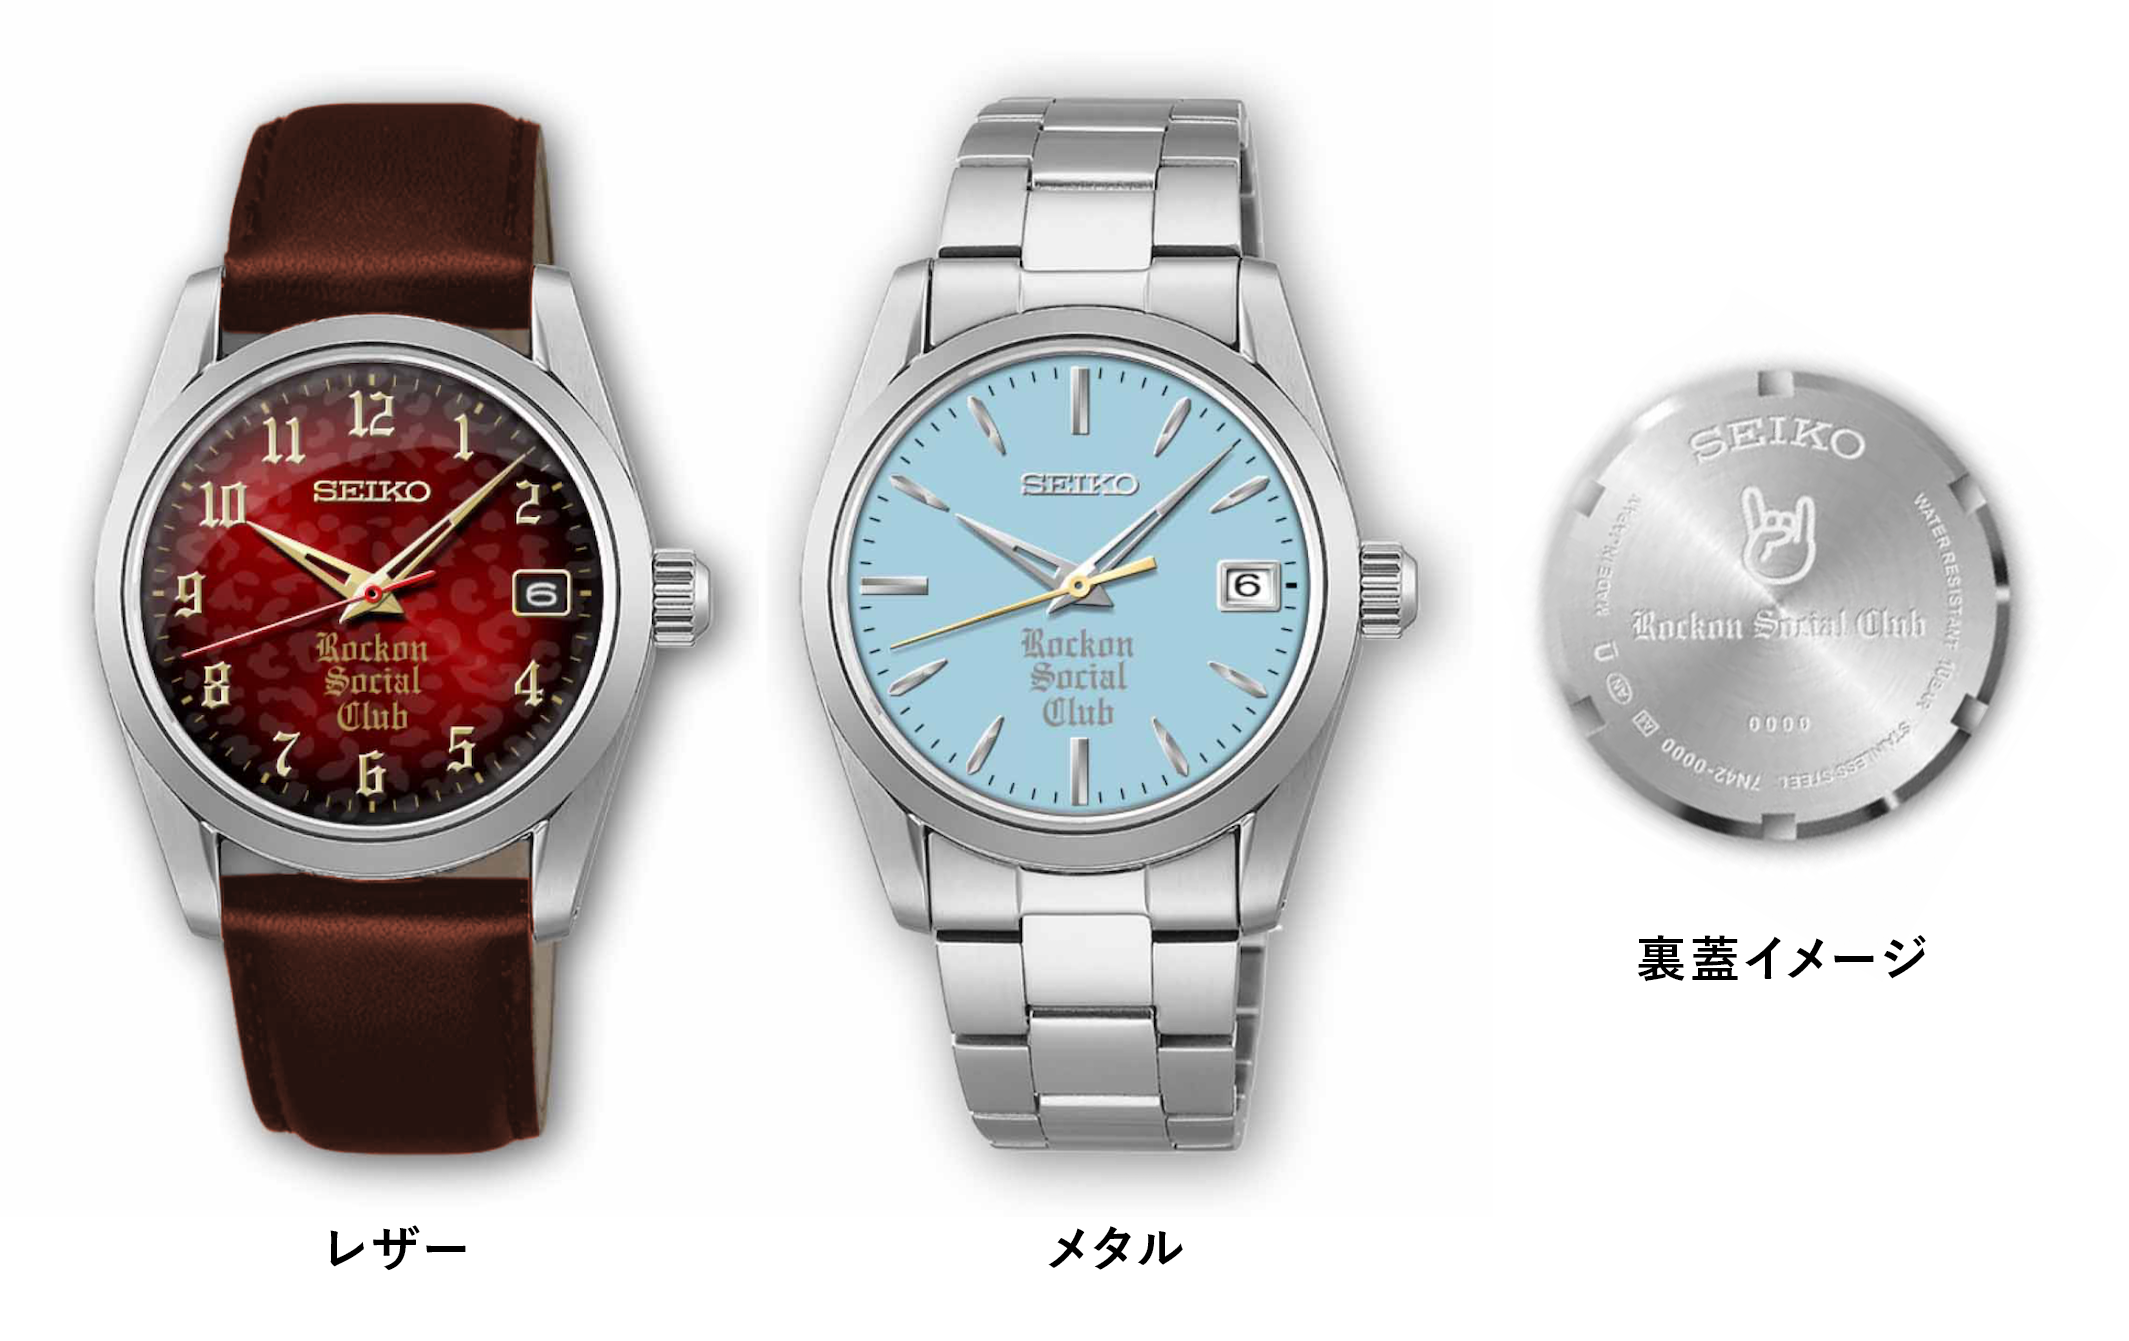 Rockon Social Club×SEIKOコラボレーション限定モデル腕時計、予約販売 